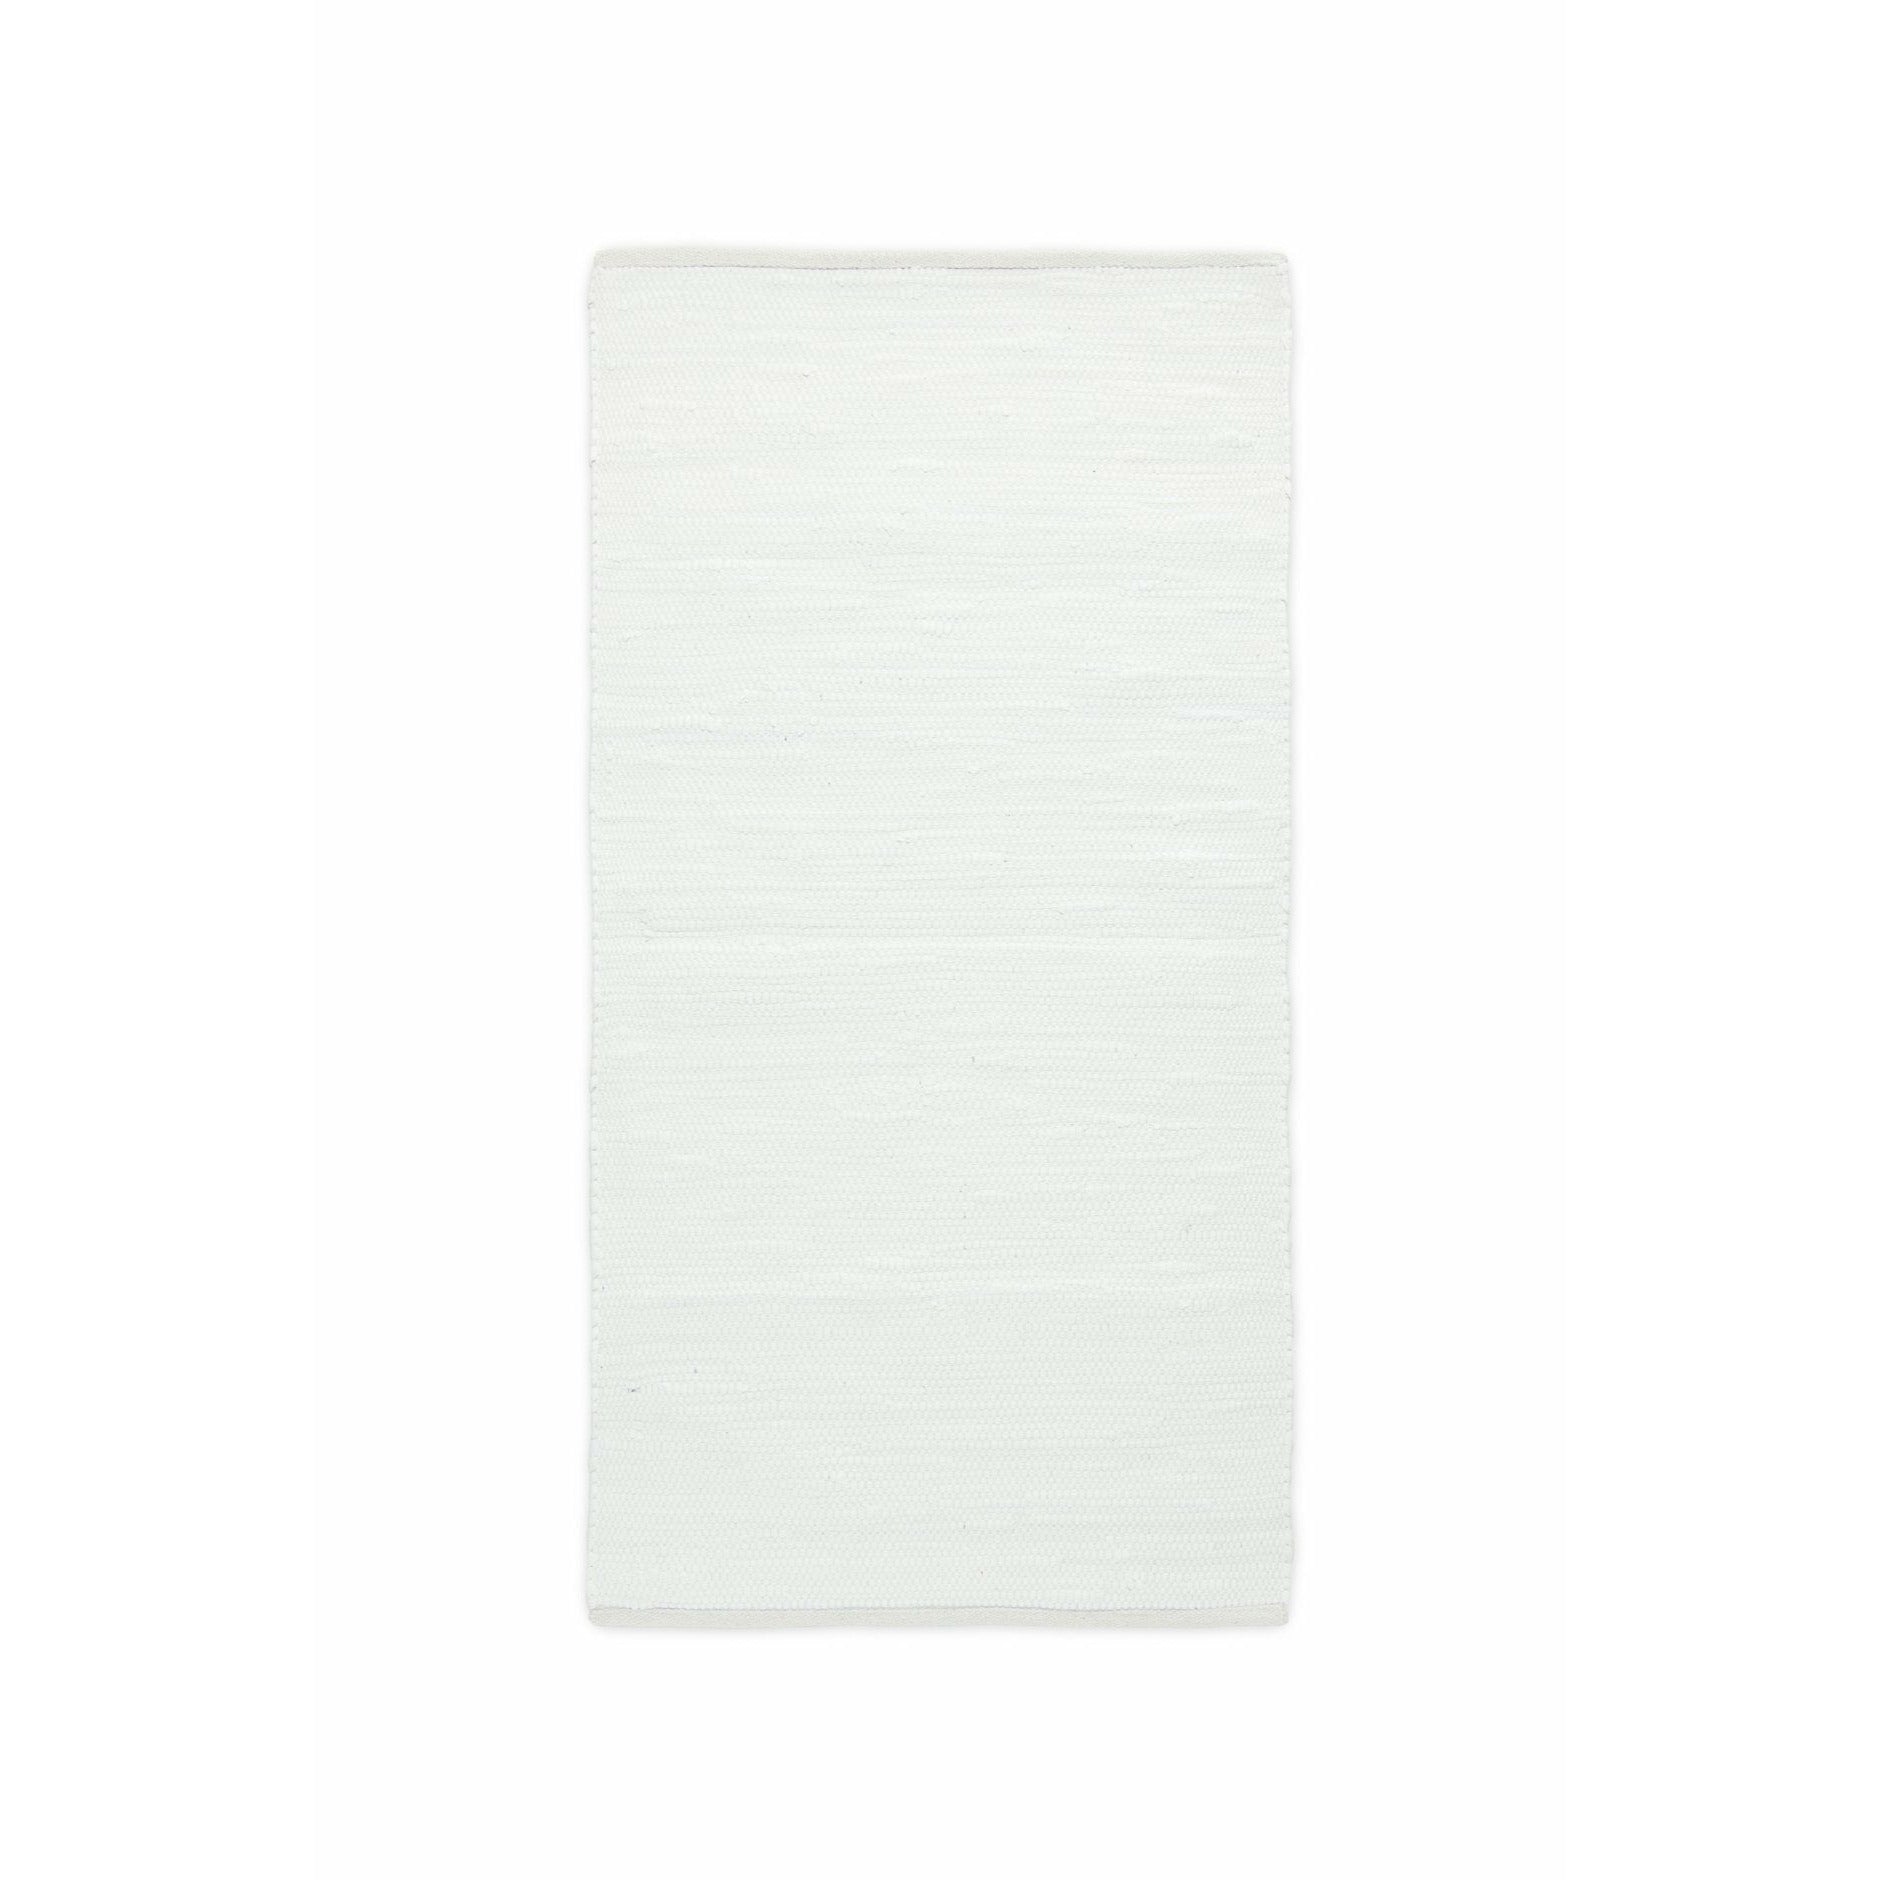 Koberec pevný bavlněný koberec bílý, 170 x 240 cm